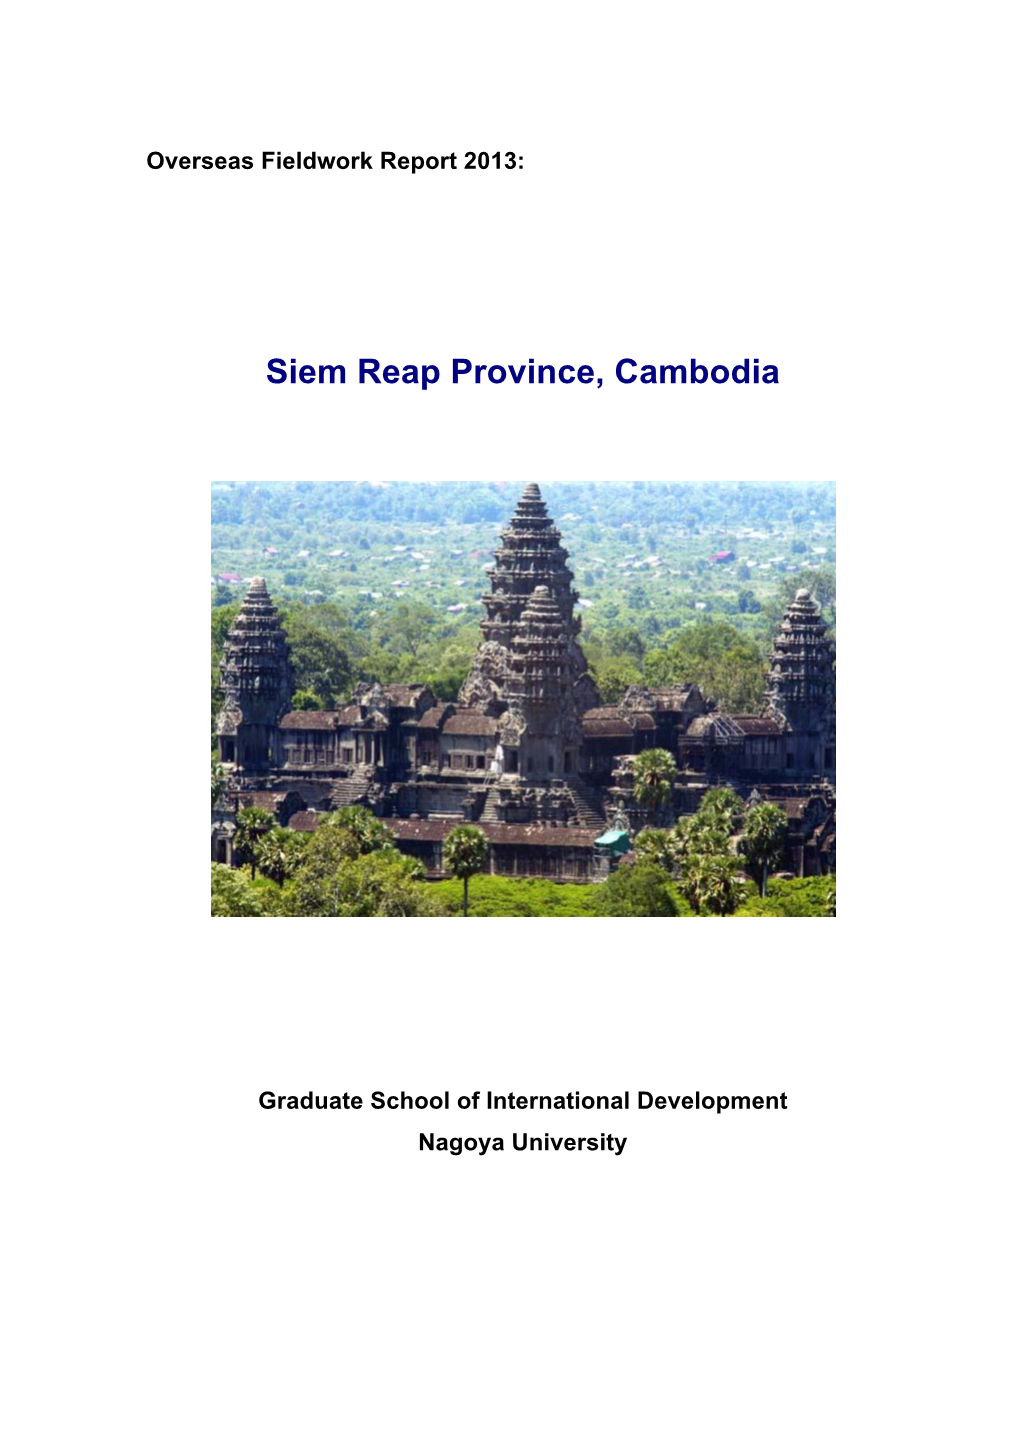 Siem Reap Province, Cambodia